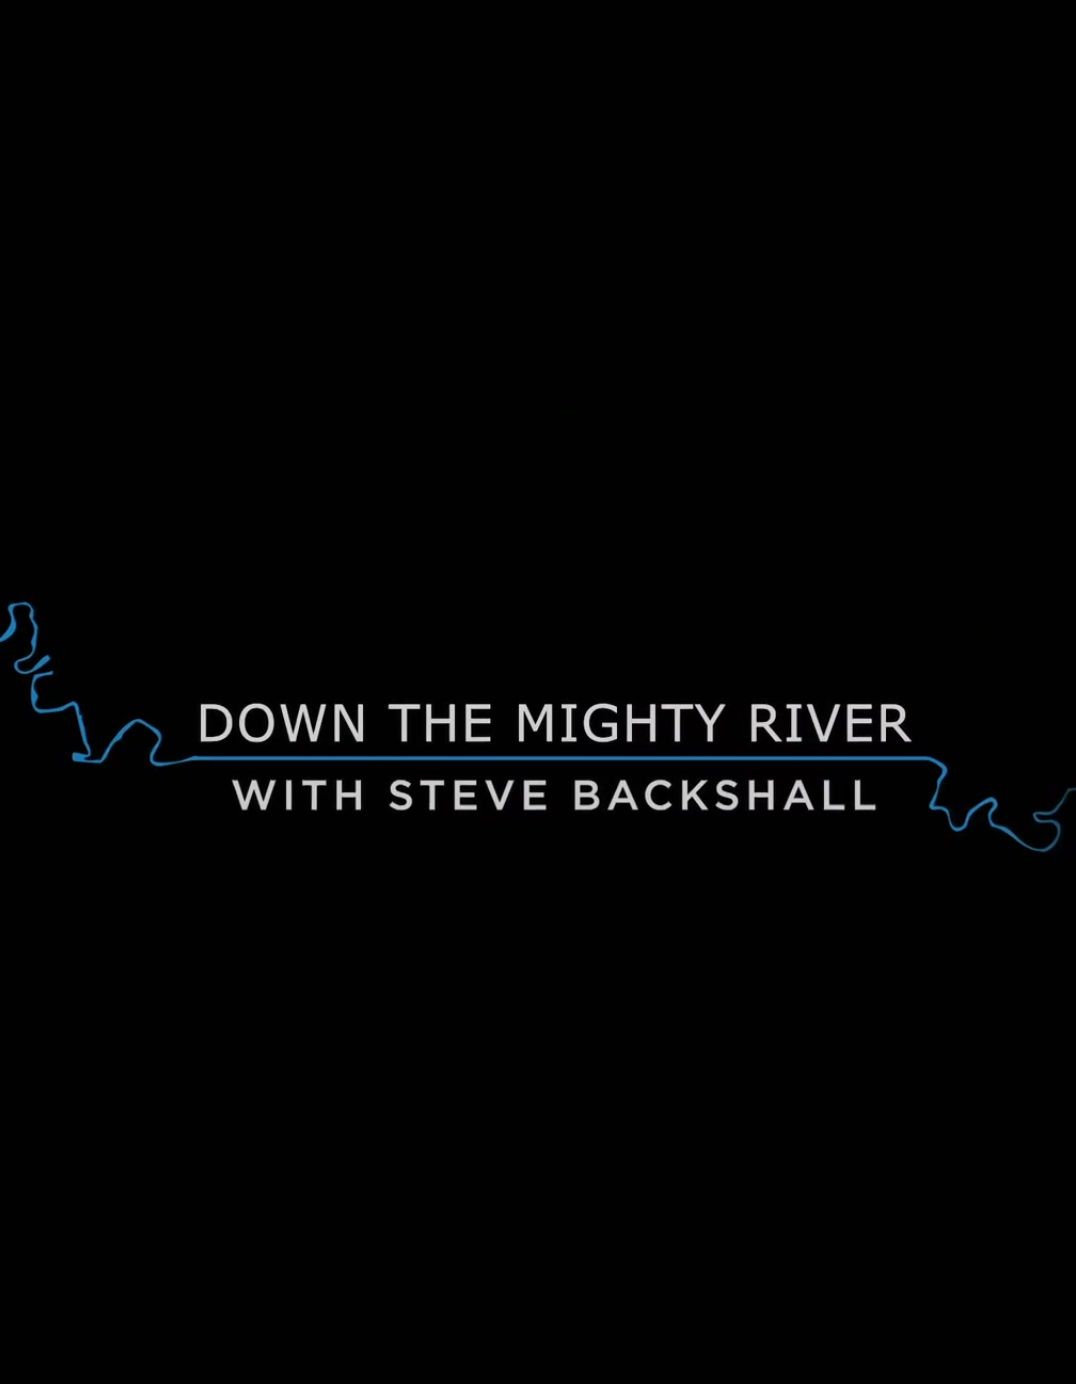 Down the Mighty River with Steve Backshall ne zaman